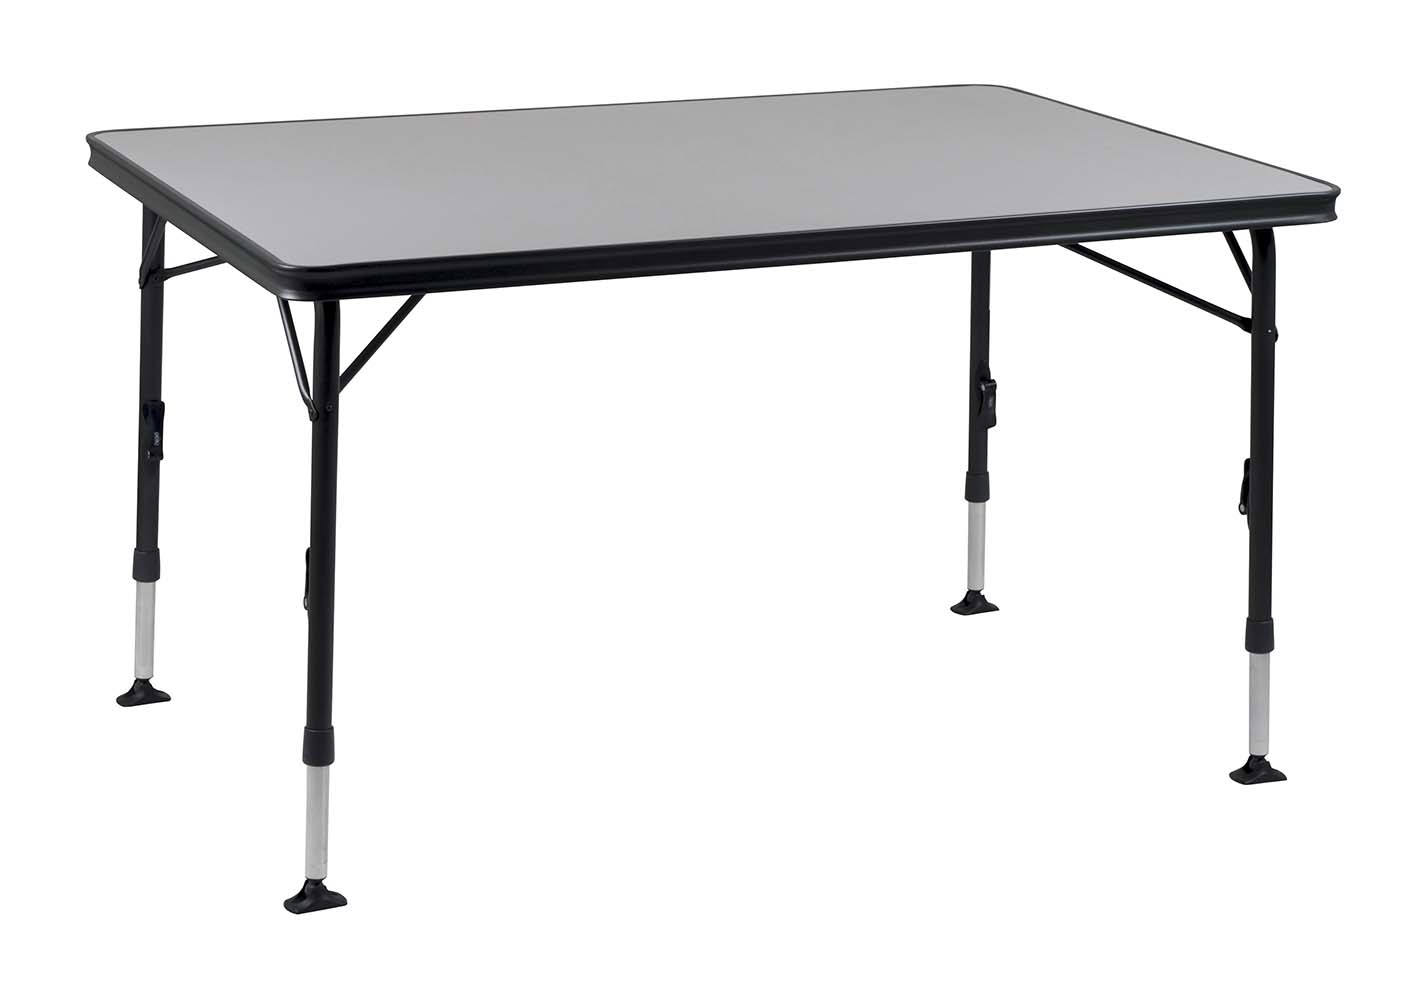 Crespo - Table - AP/273 - 130x85 cm - Black